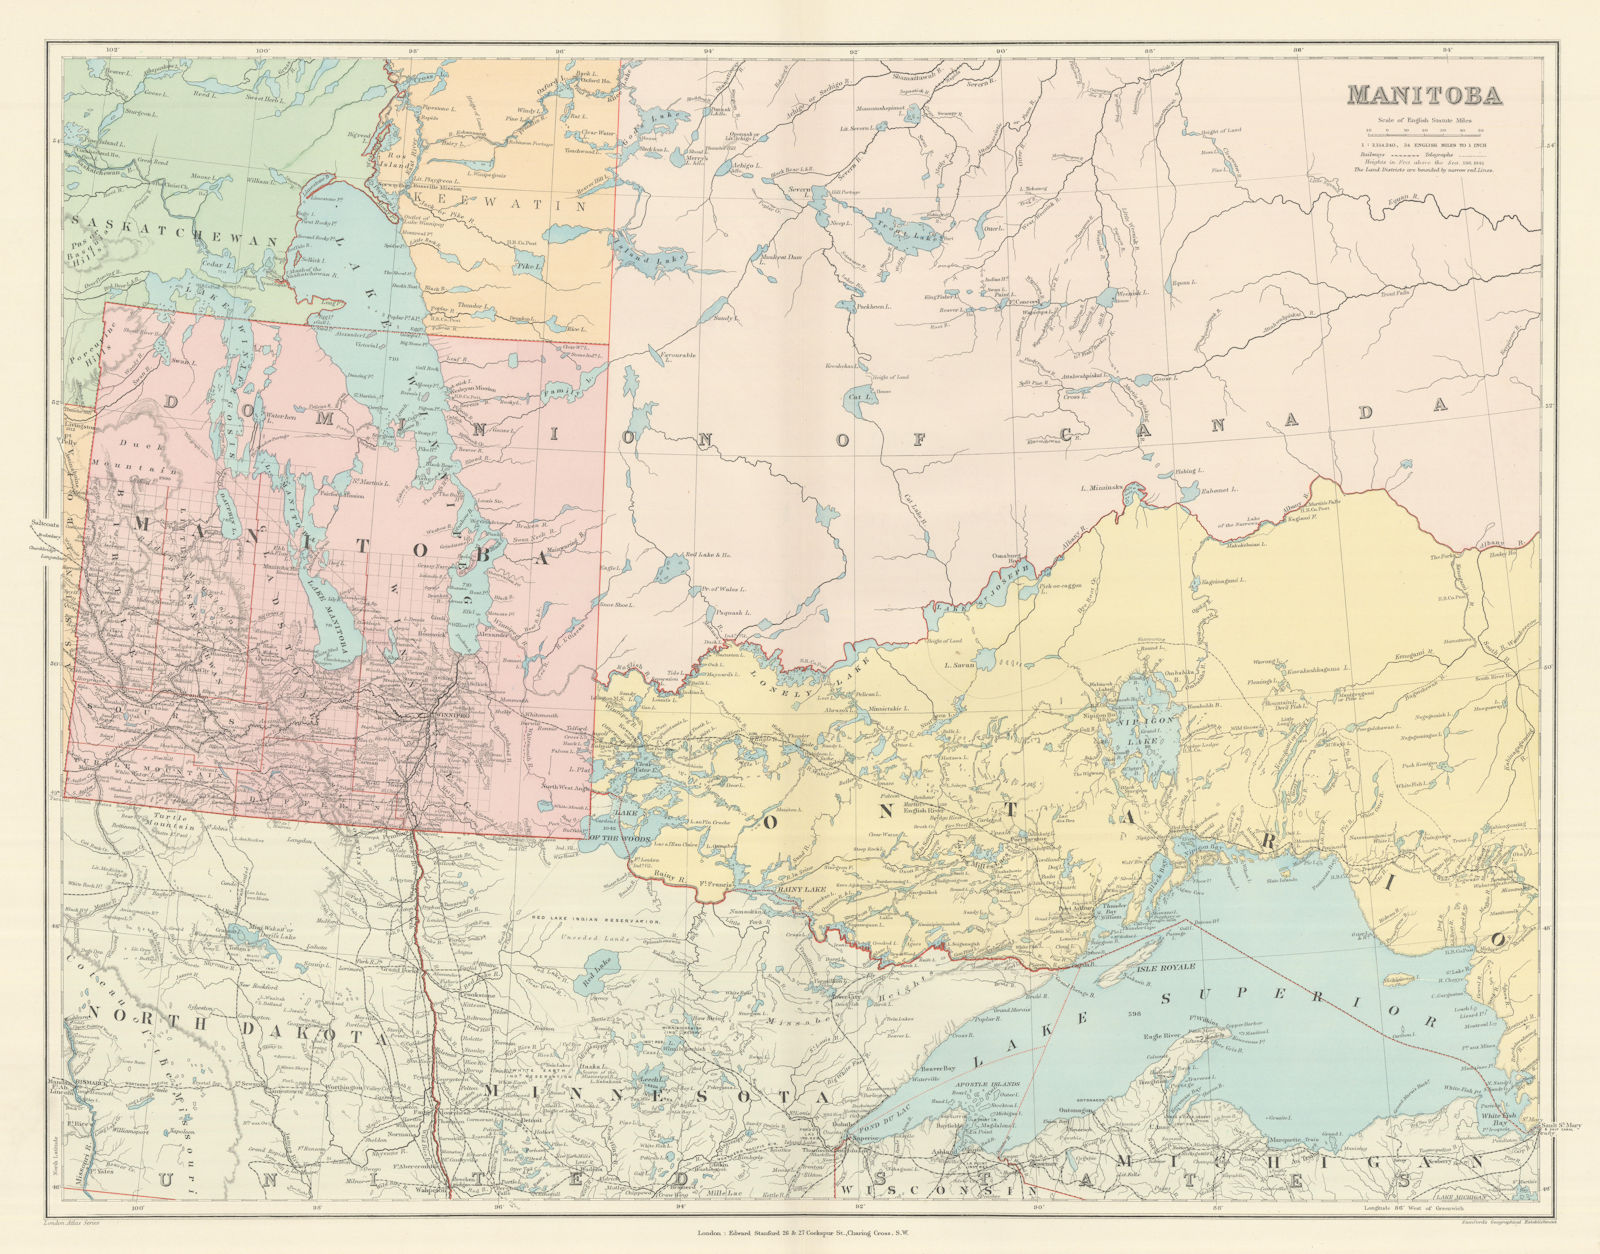 Associate Product Manitoba. West Ontario, Lake Superior & Winnipeg. Canada. STANFORD 1894 map